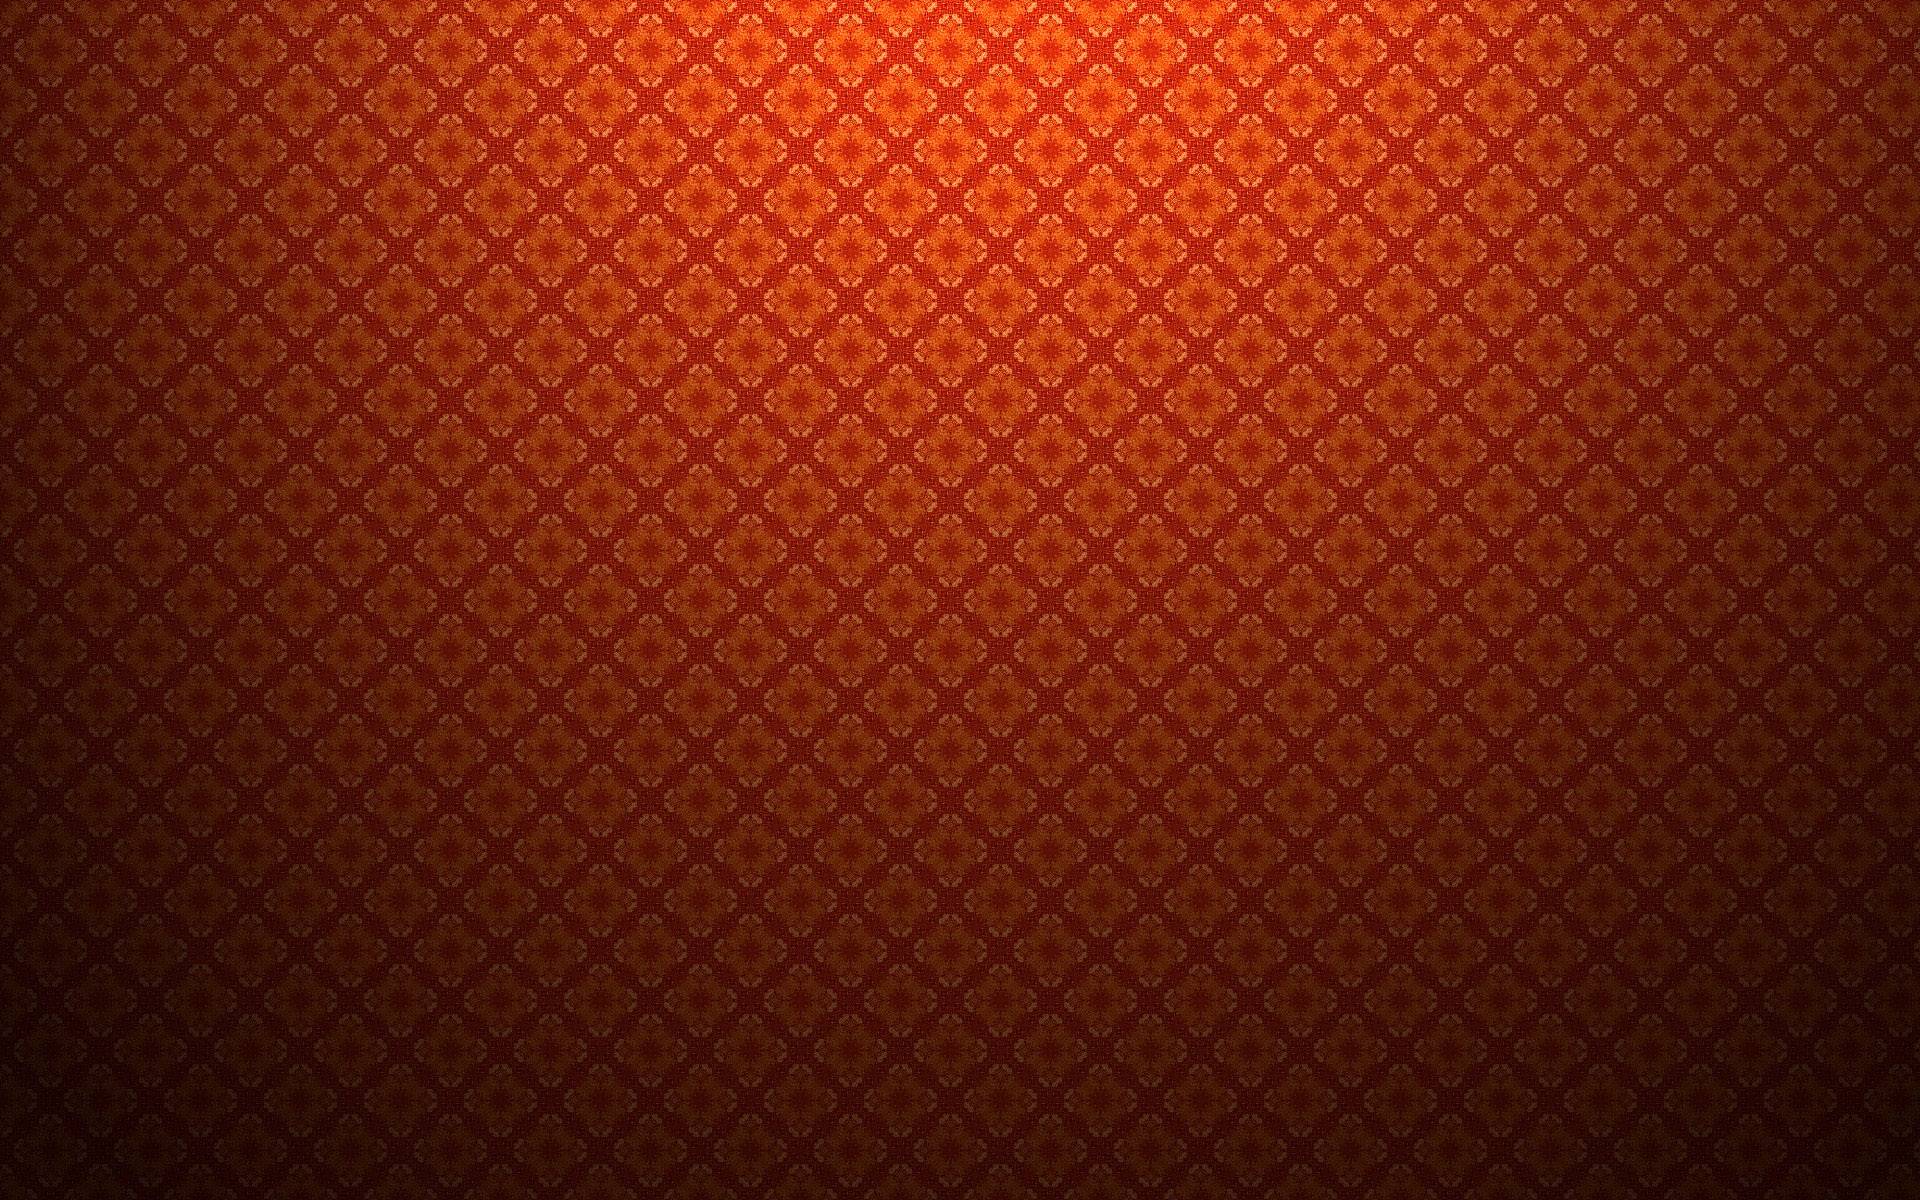 Red HD Wallpaper: Wallpaper Red HD. .Ssofc